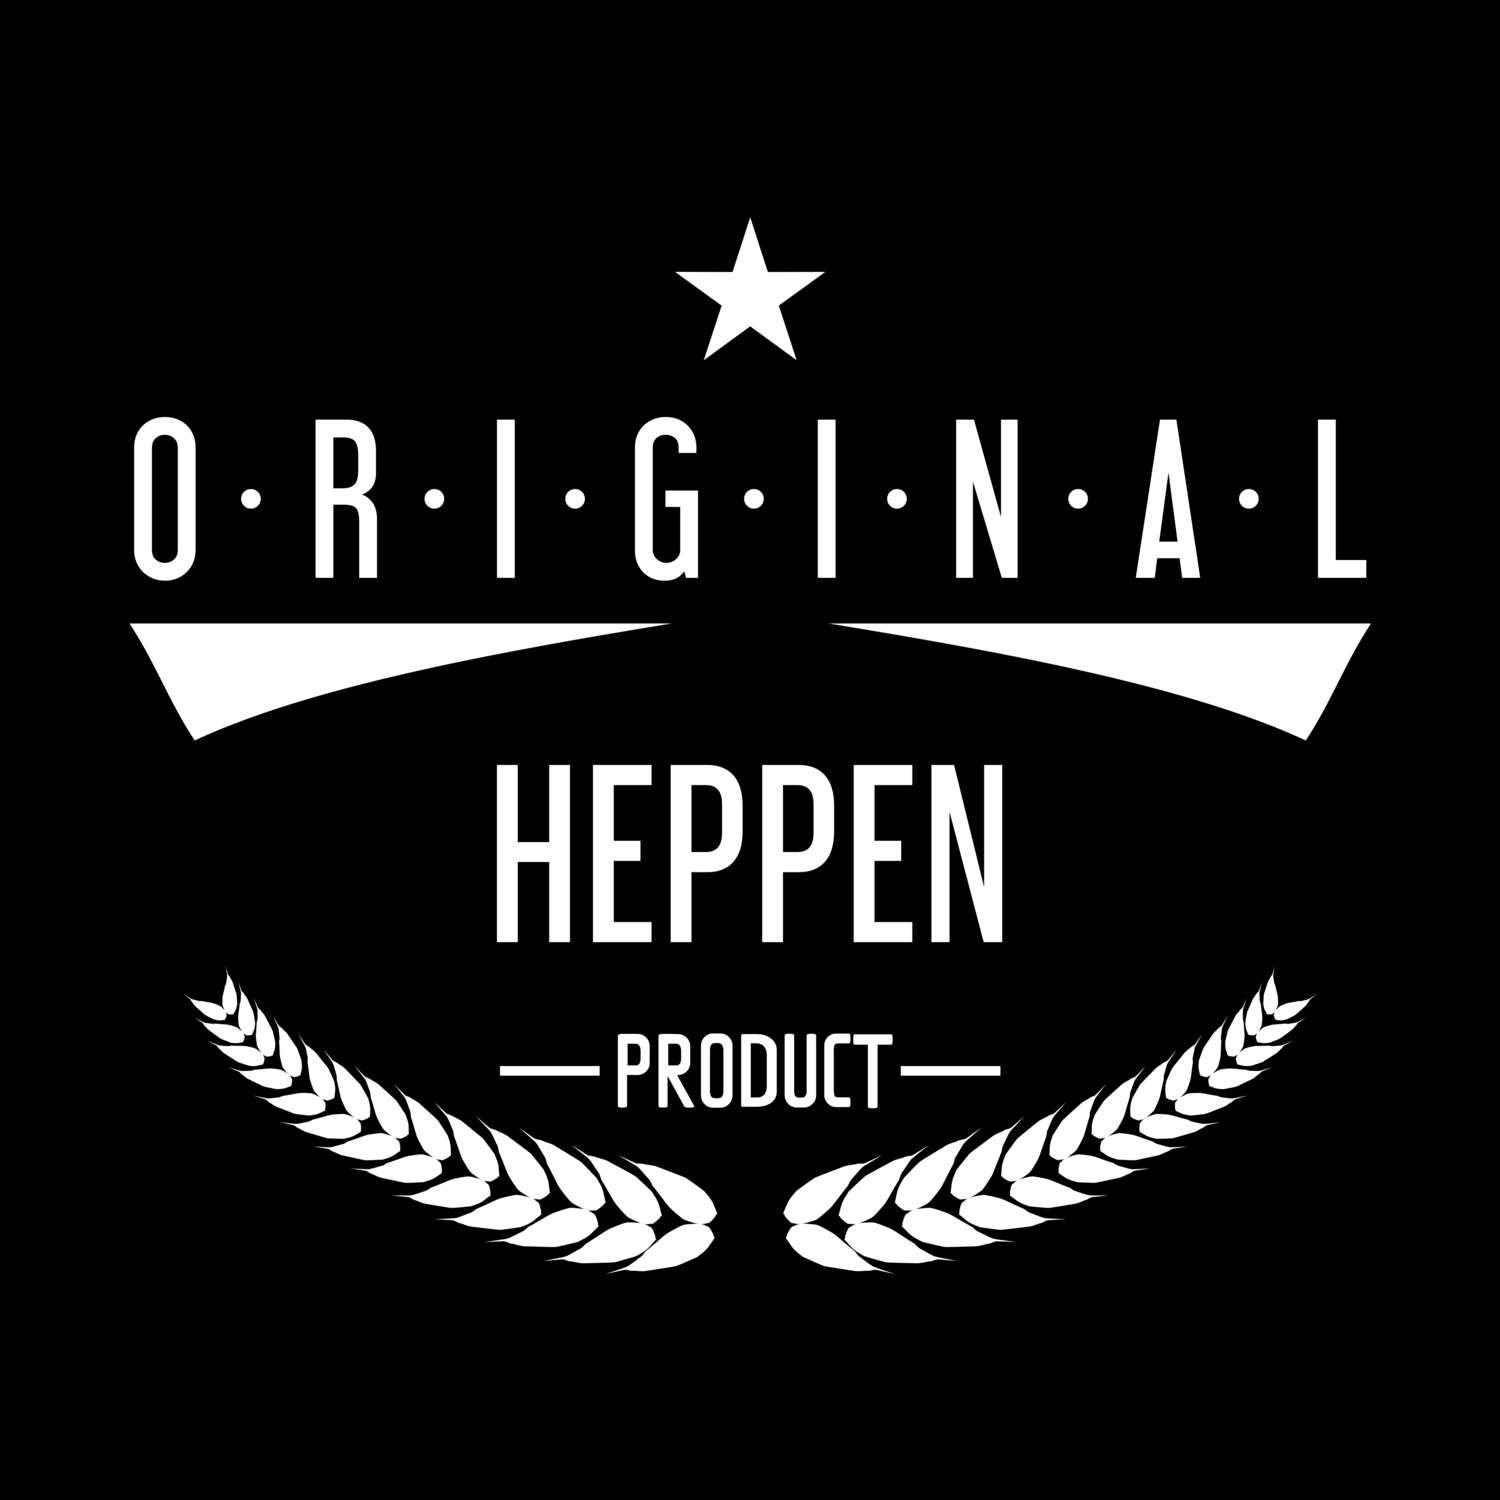 Heppen T-Shirt »Original Product«